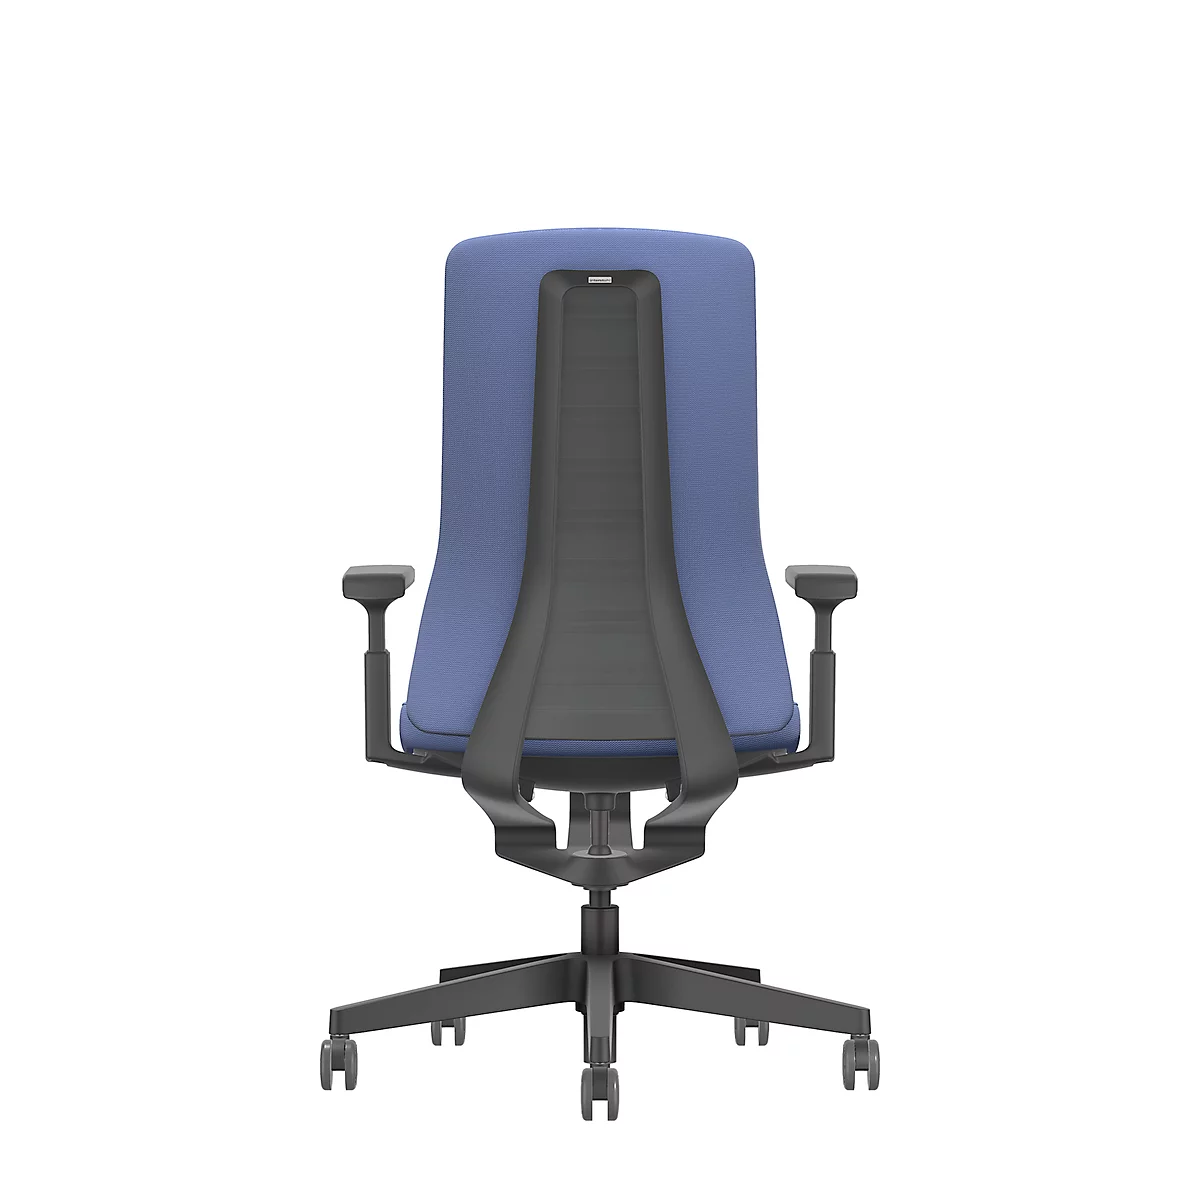 Interstuhl bureaustoel PUREis3, verstelbare armleuningen, 3D auto-synchroonmechanisme, kuipzitting, gestoffeerde rug, kobaltblauw/zwart